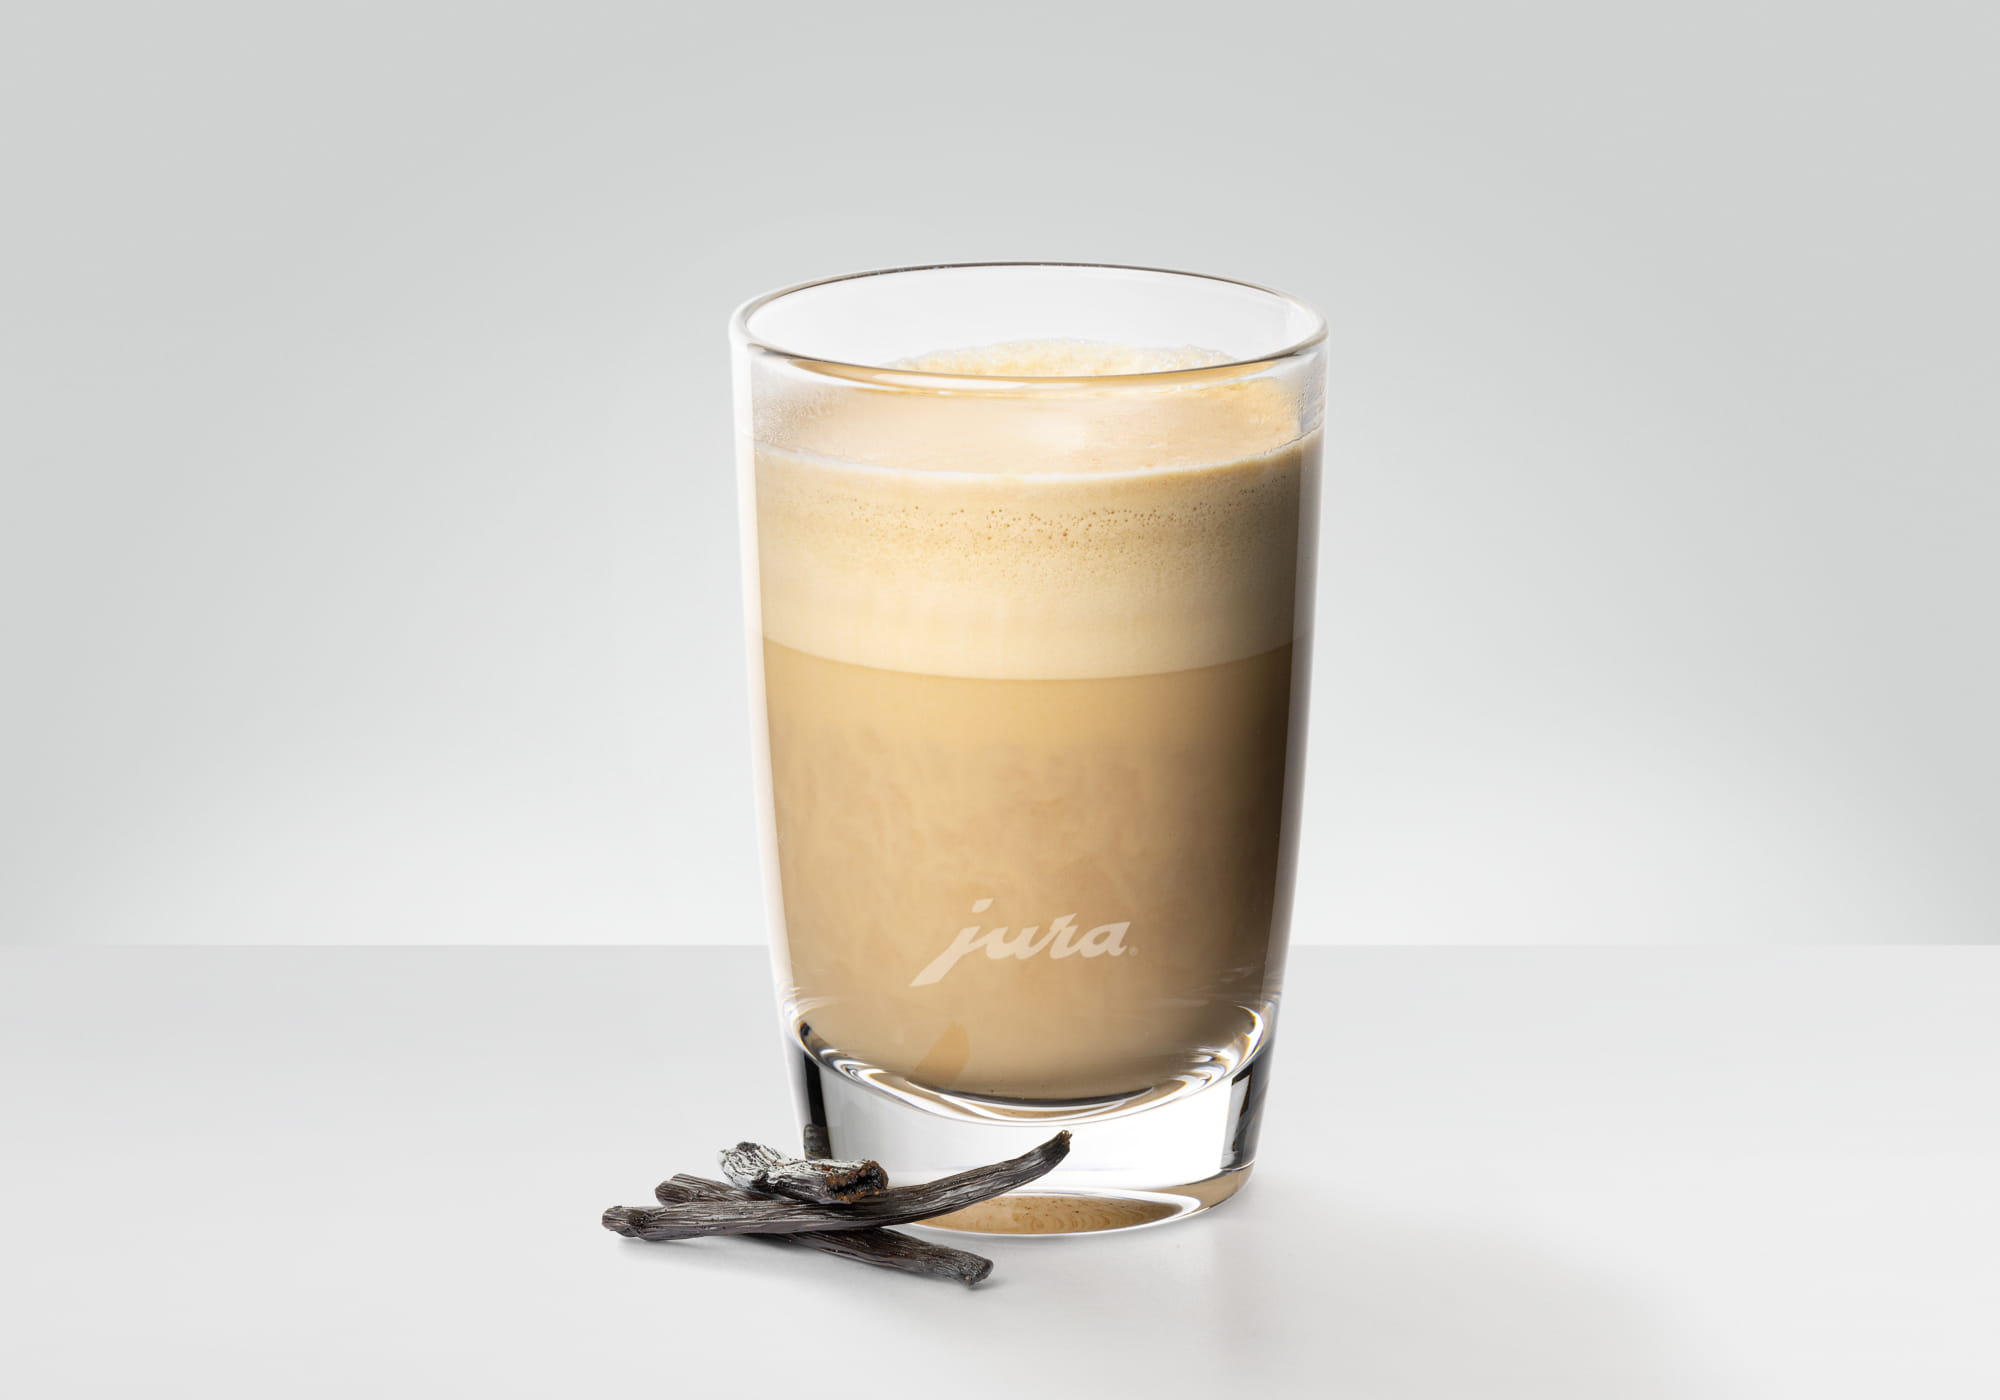 https://us.jura.com/-/media/global/images/coffee-recipes/images-redesign-2020/sweet_latte_vanilla_2000x1400px.jpg?h=1400&iar=0&w=2000&hash=63AAEC60FD011EBCB630B29709ED49C4